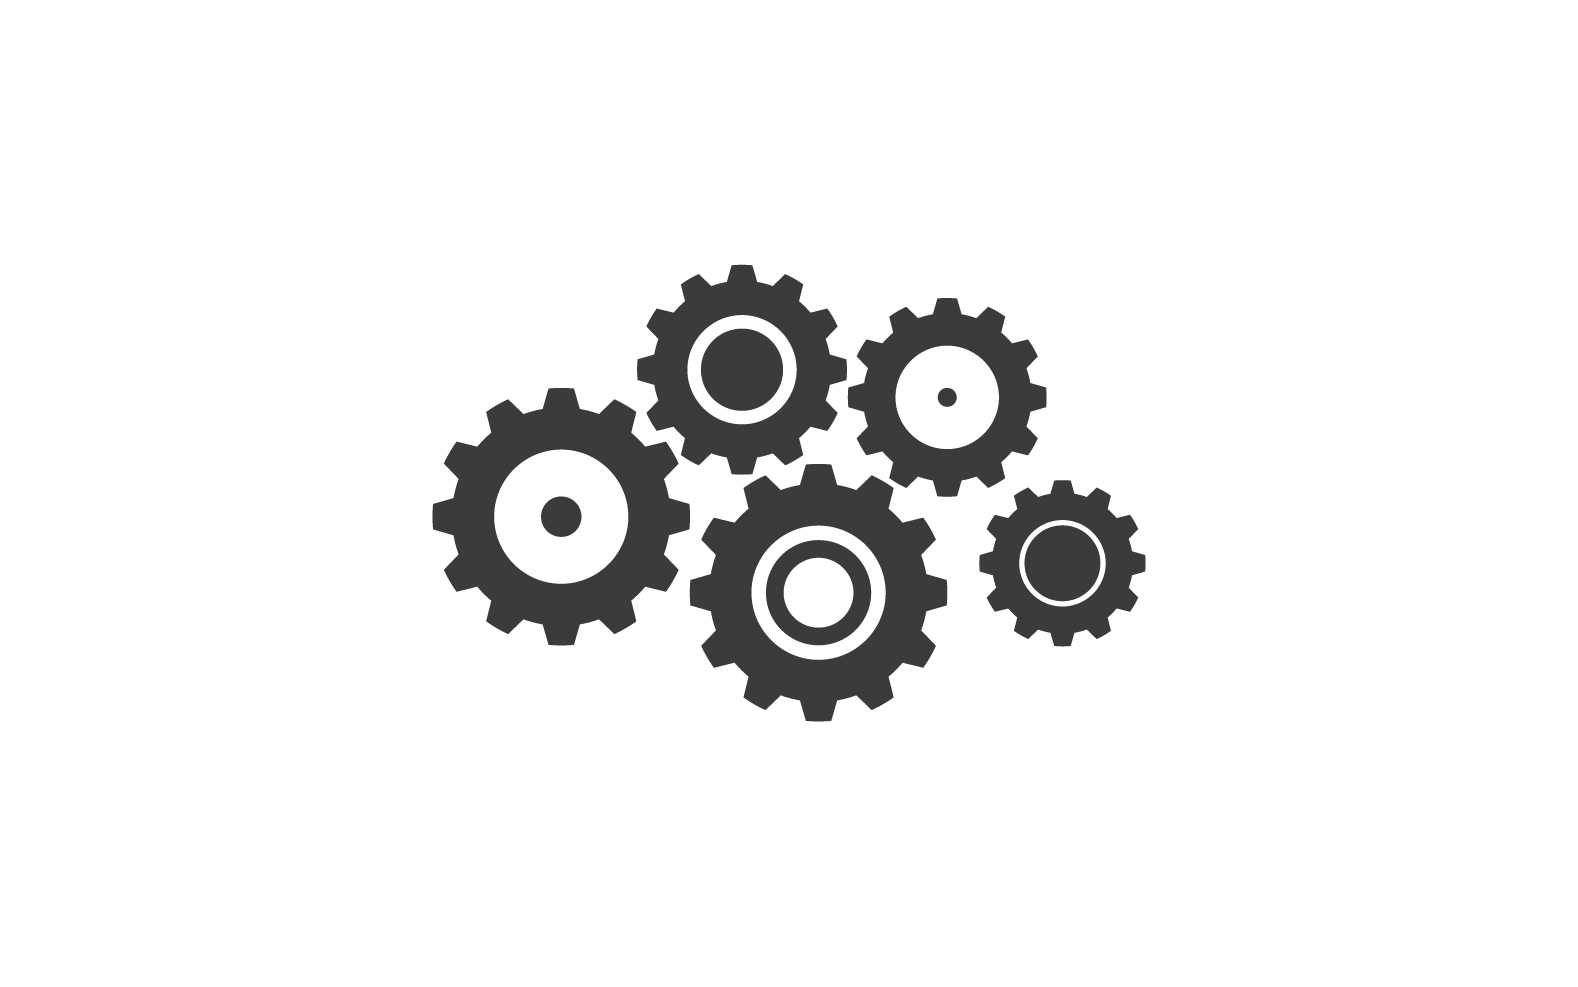 Gear machine symbol logo design vector v14